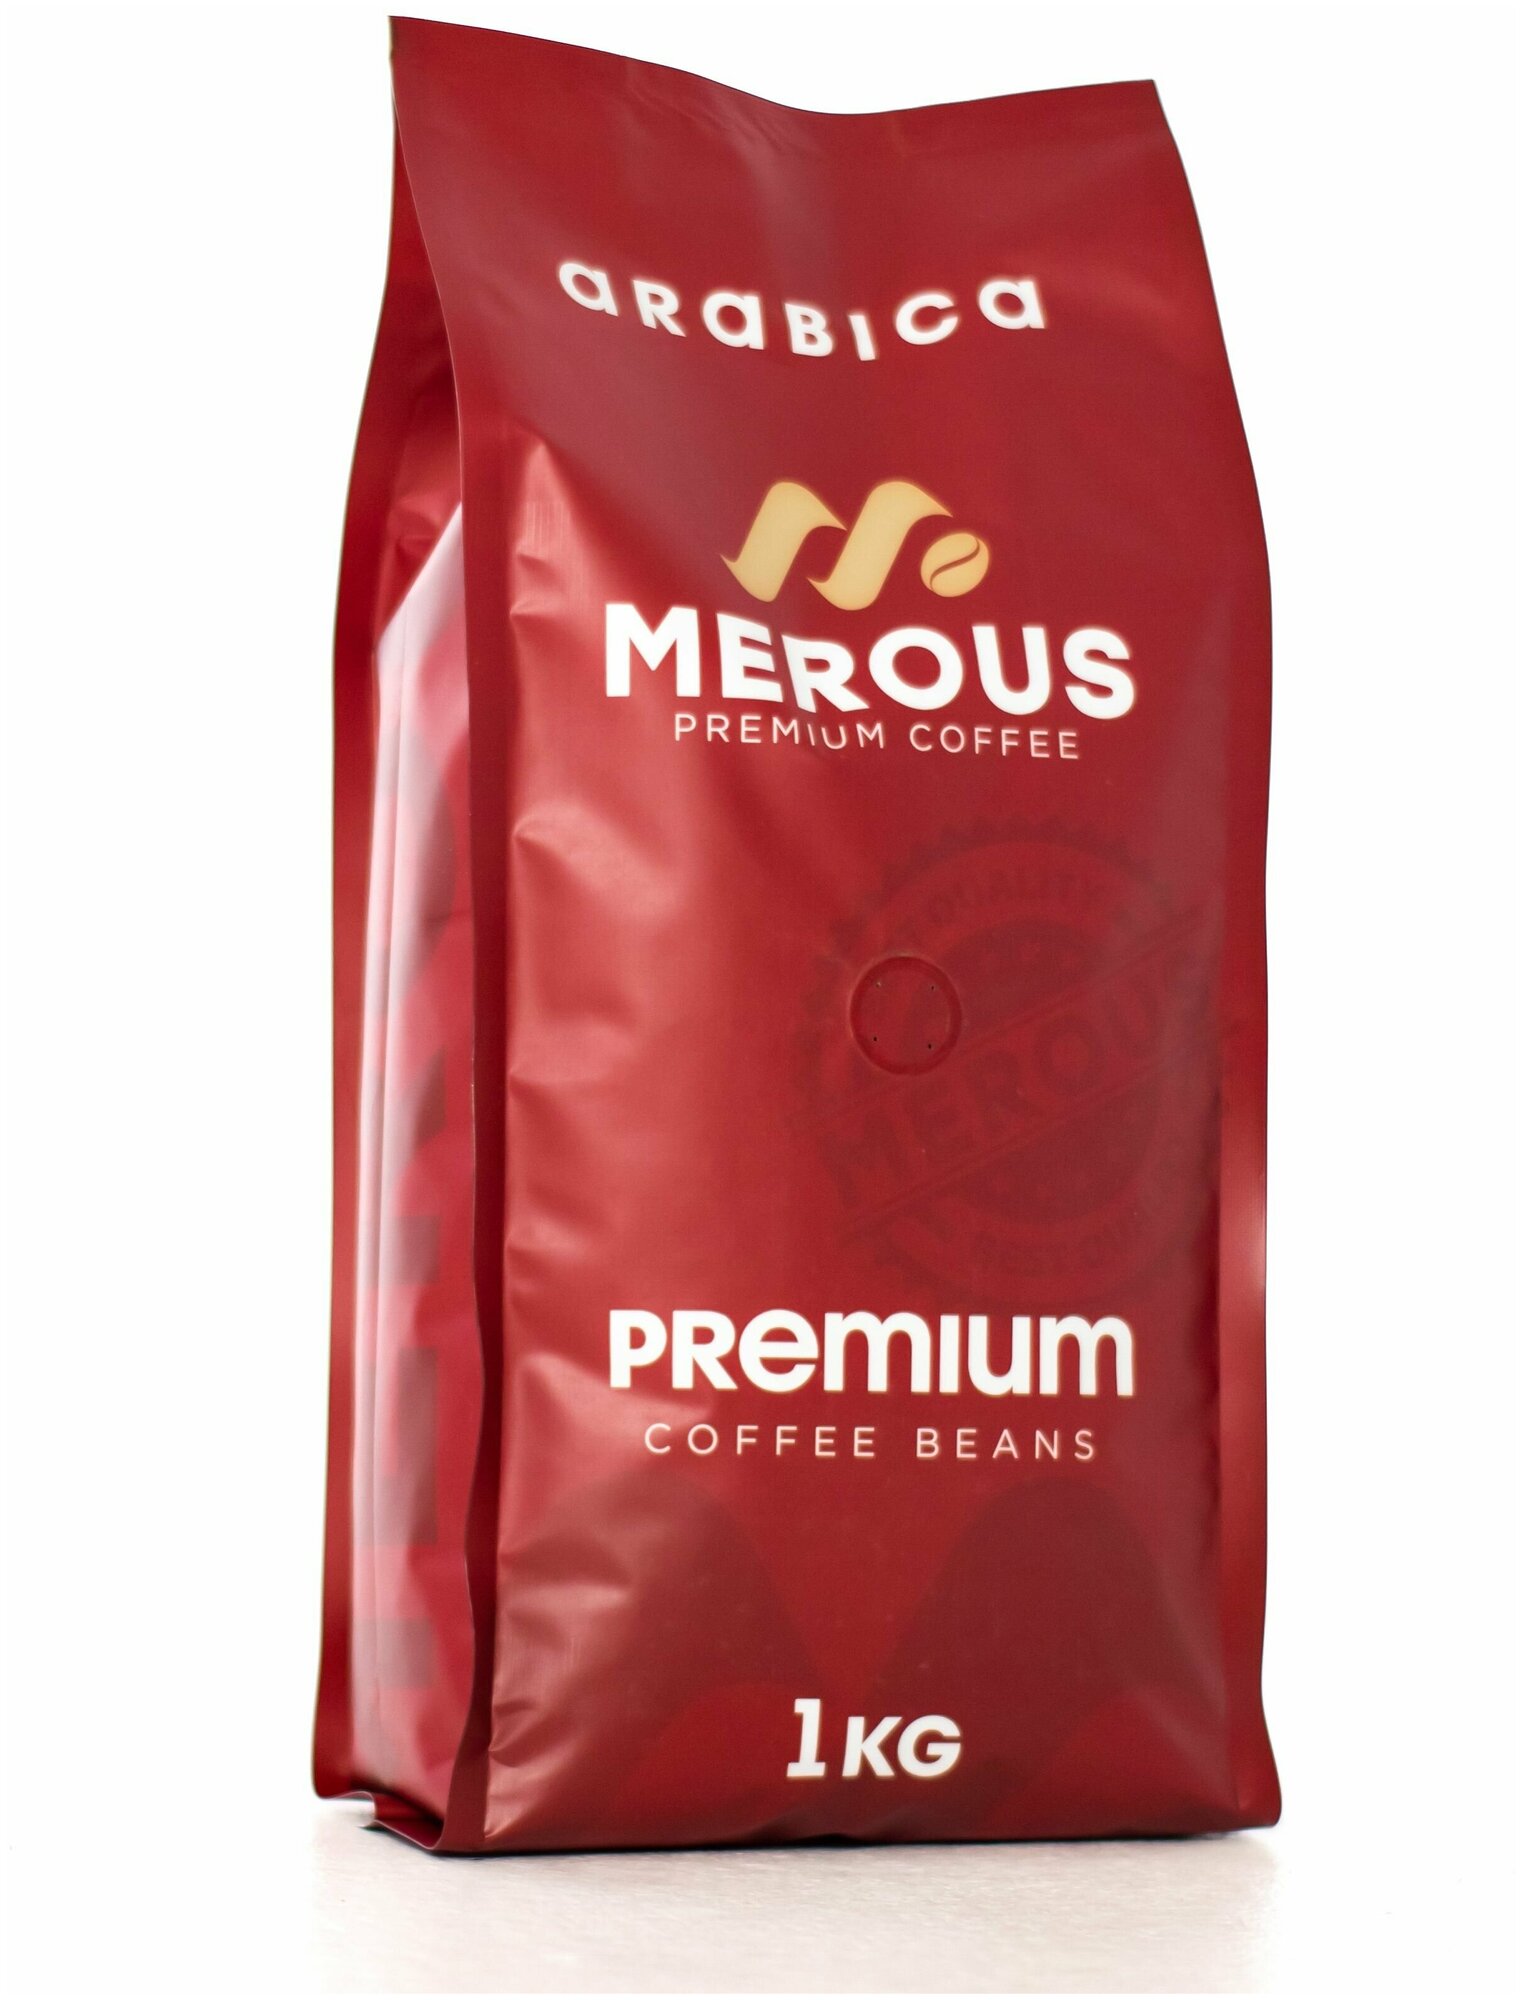 Кофе в зернах MEROUS Premium Arabica, 100% арабика, 1 кг